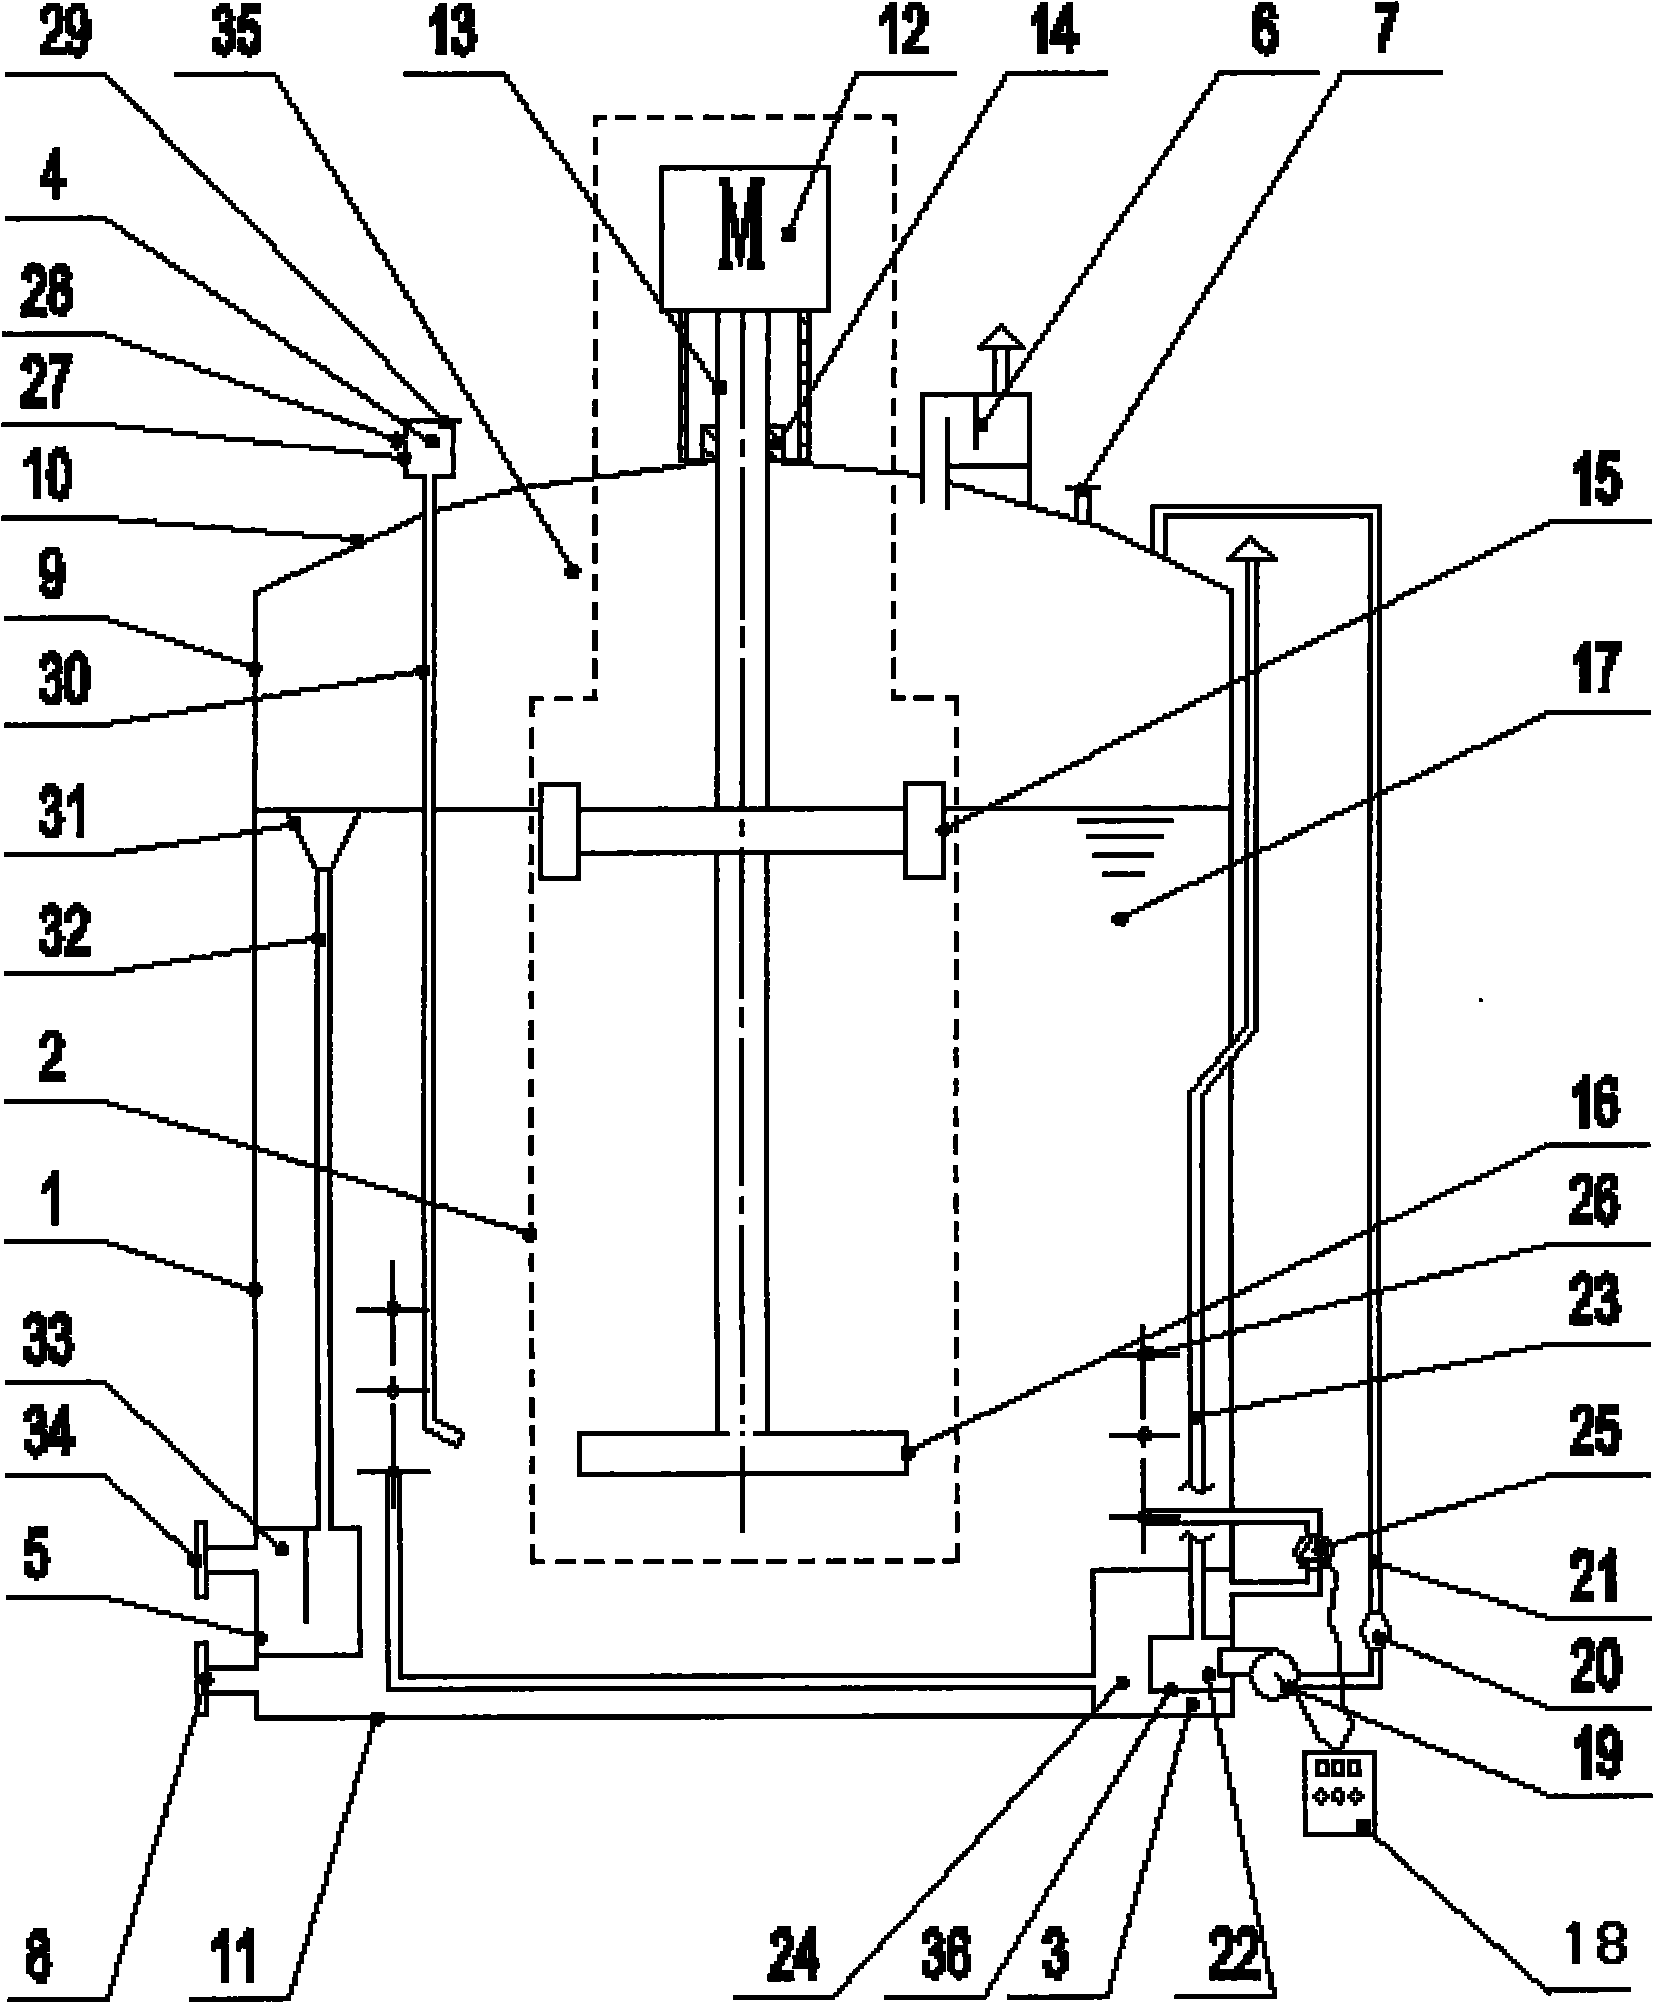 Novel upflow anaerobic reactor